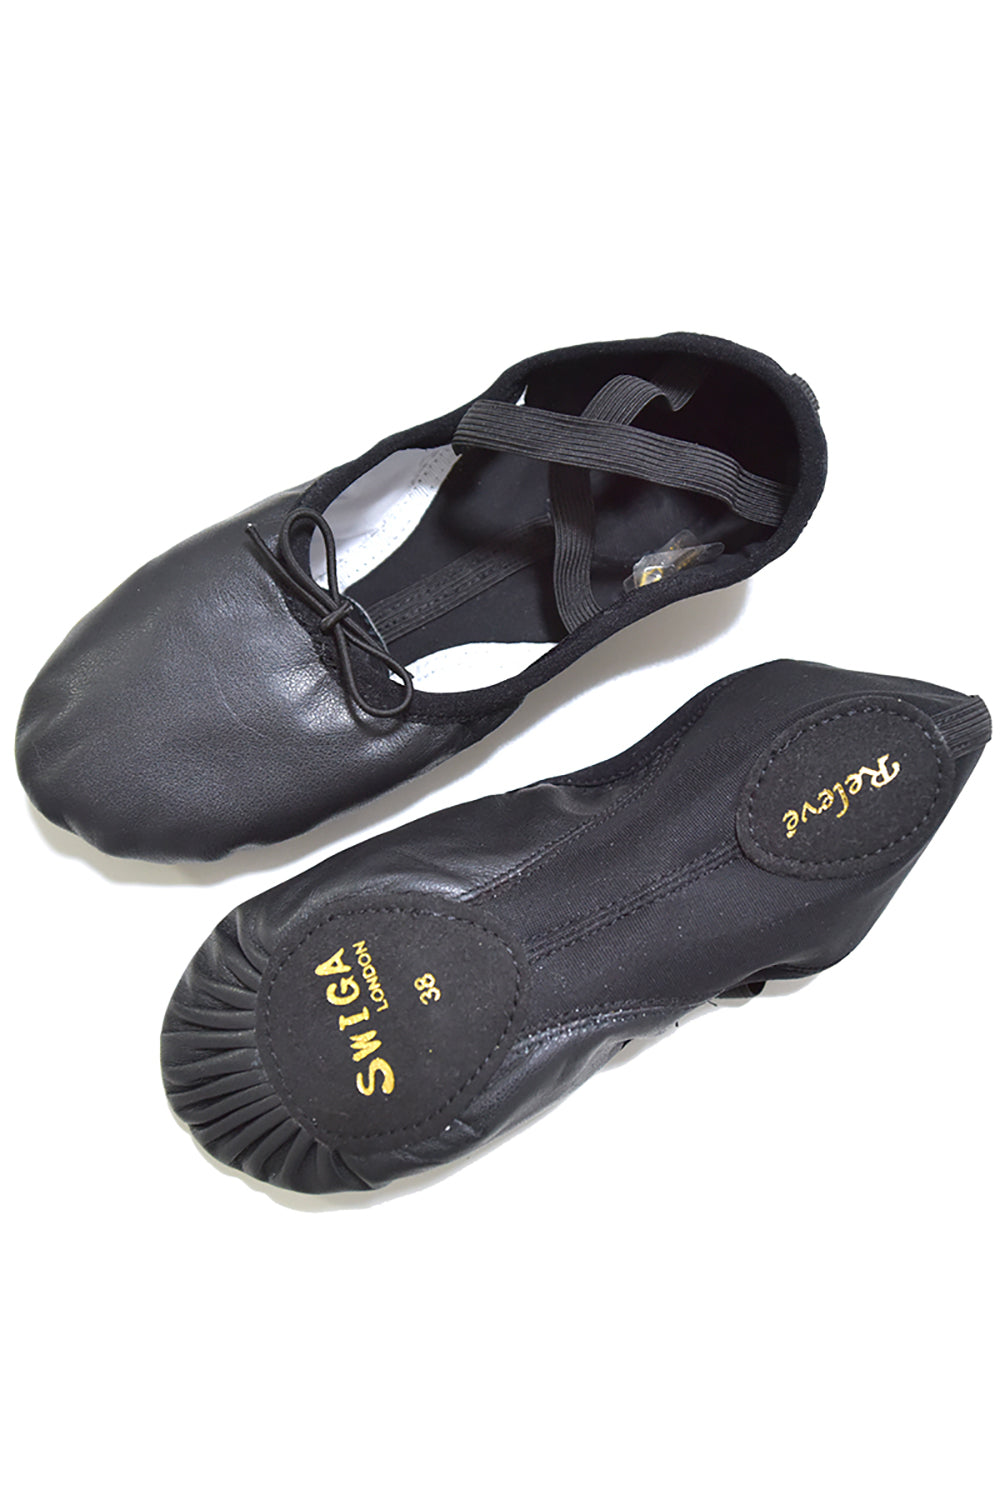 Br-5 Swiga Dance Shoes